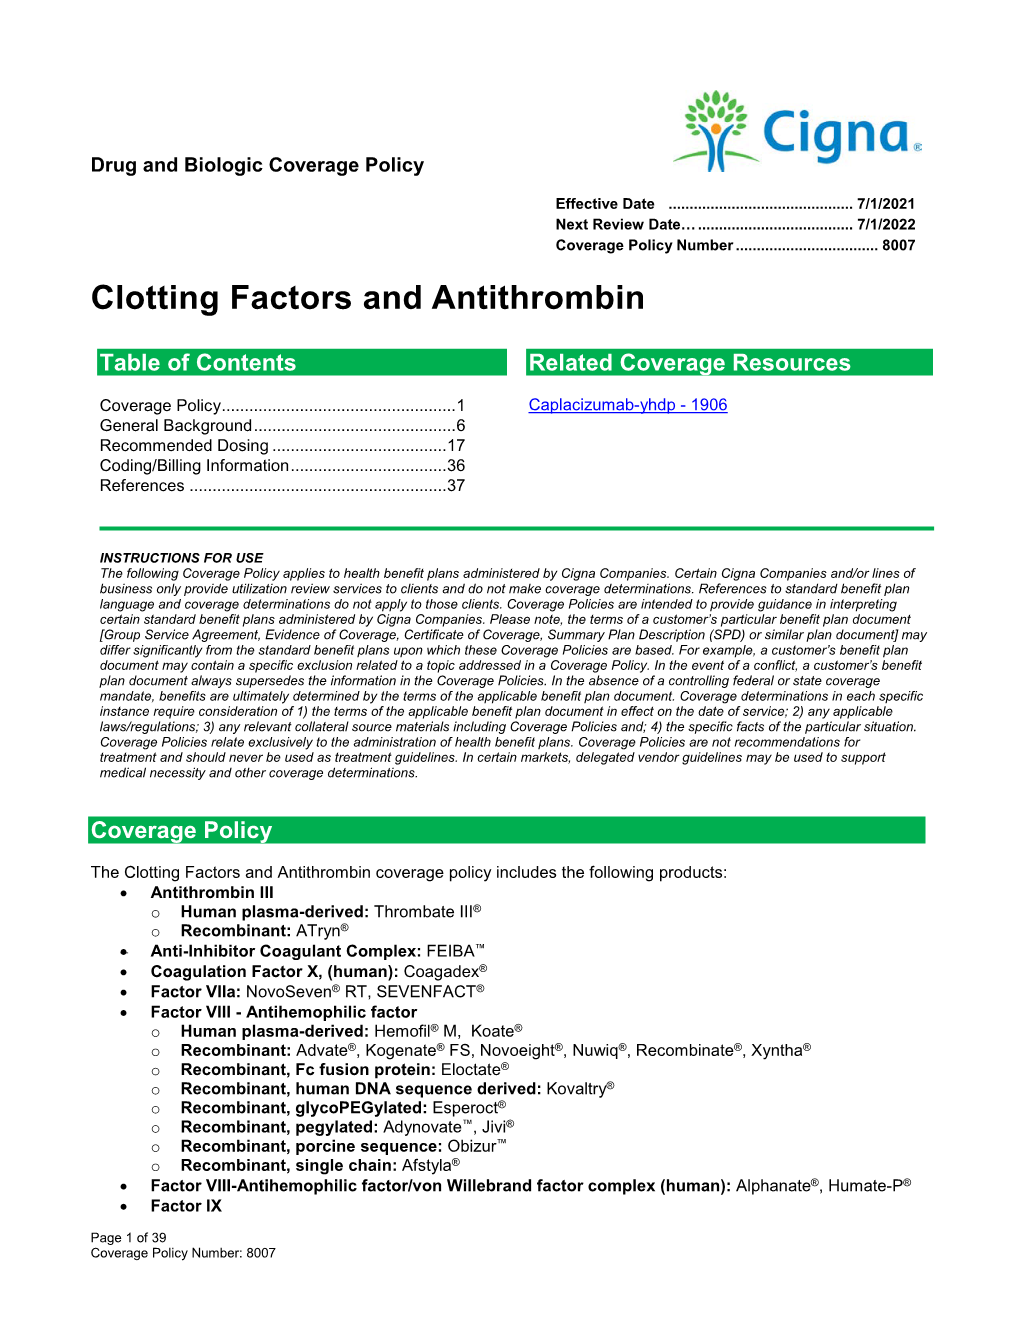 Clotting Factors and Antithrombin